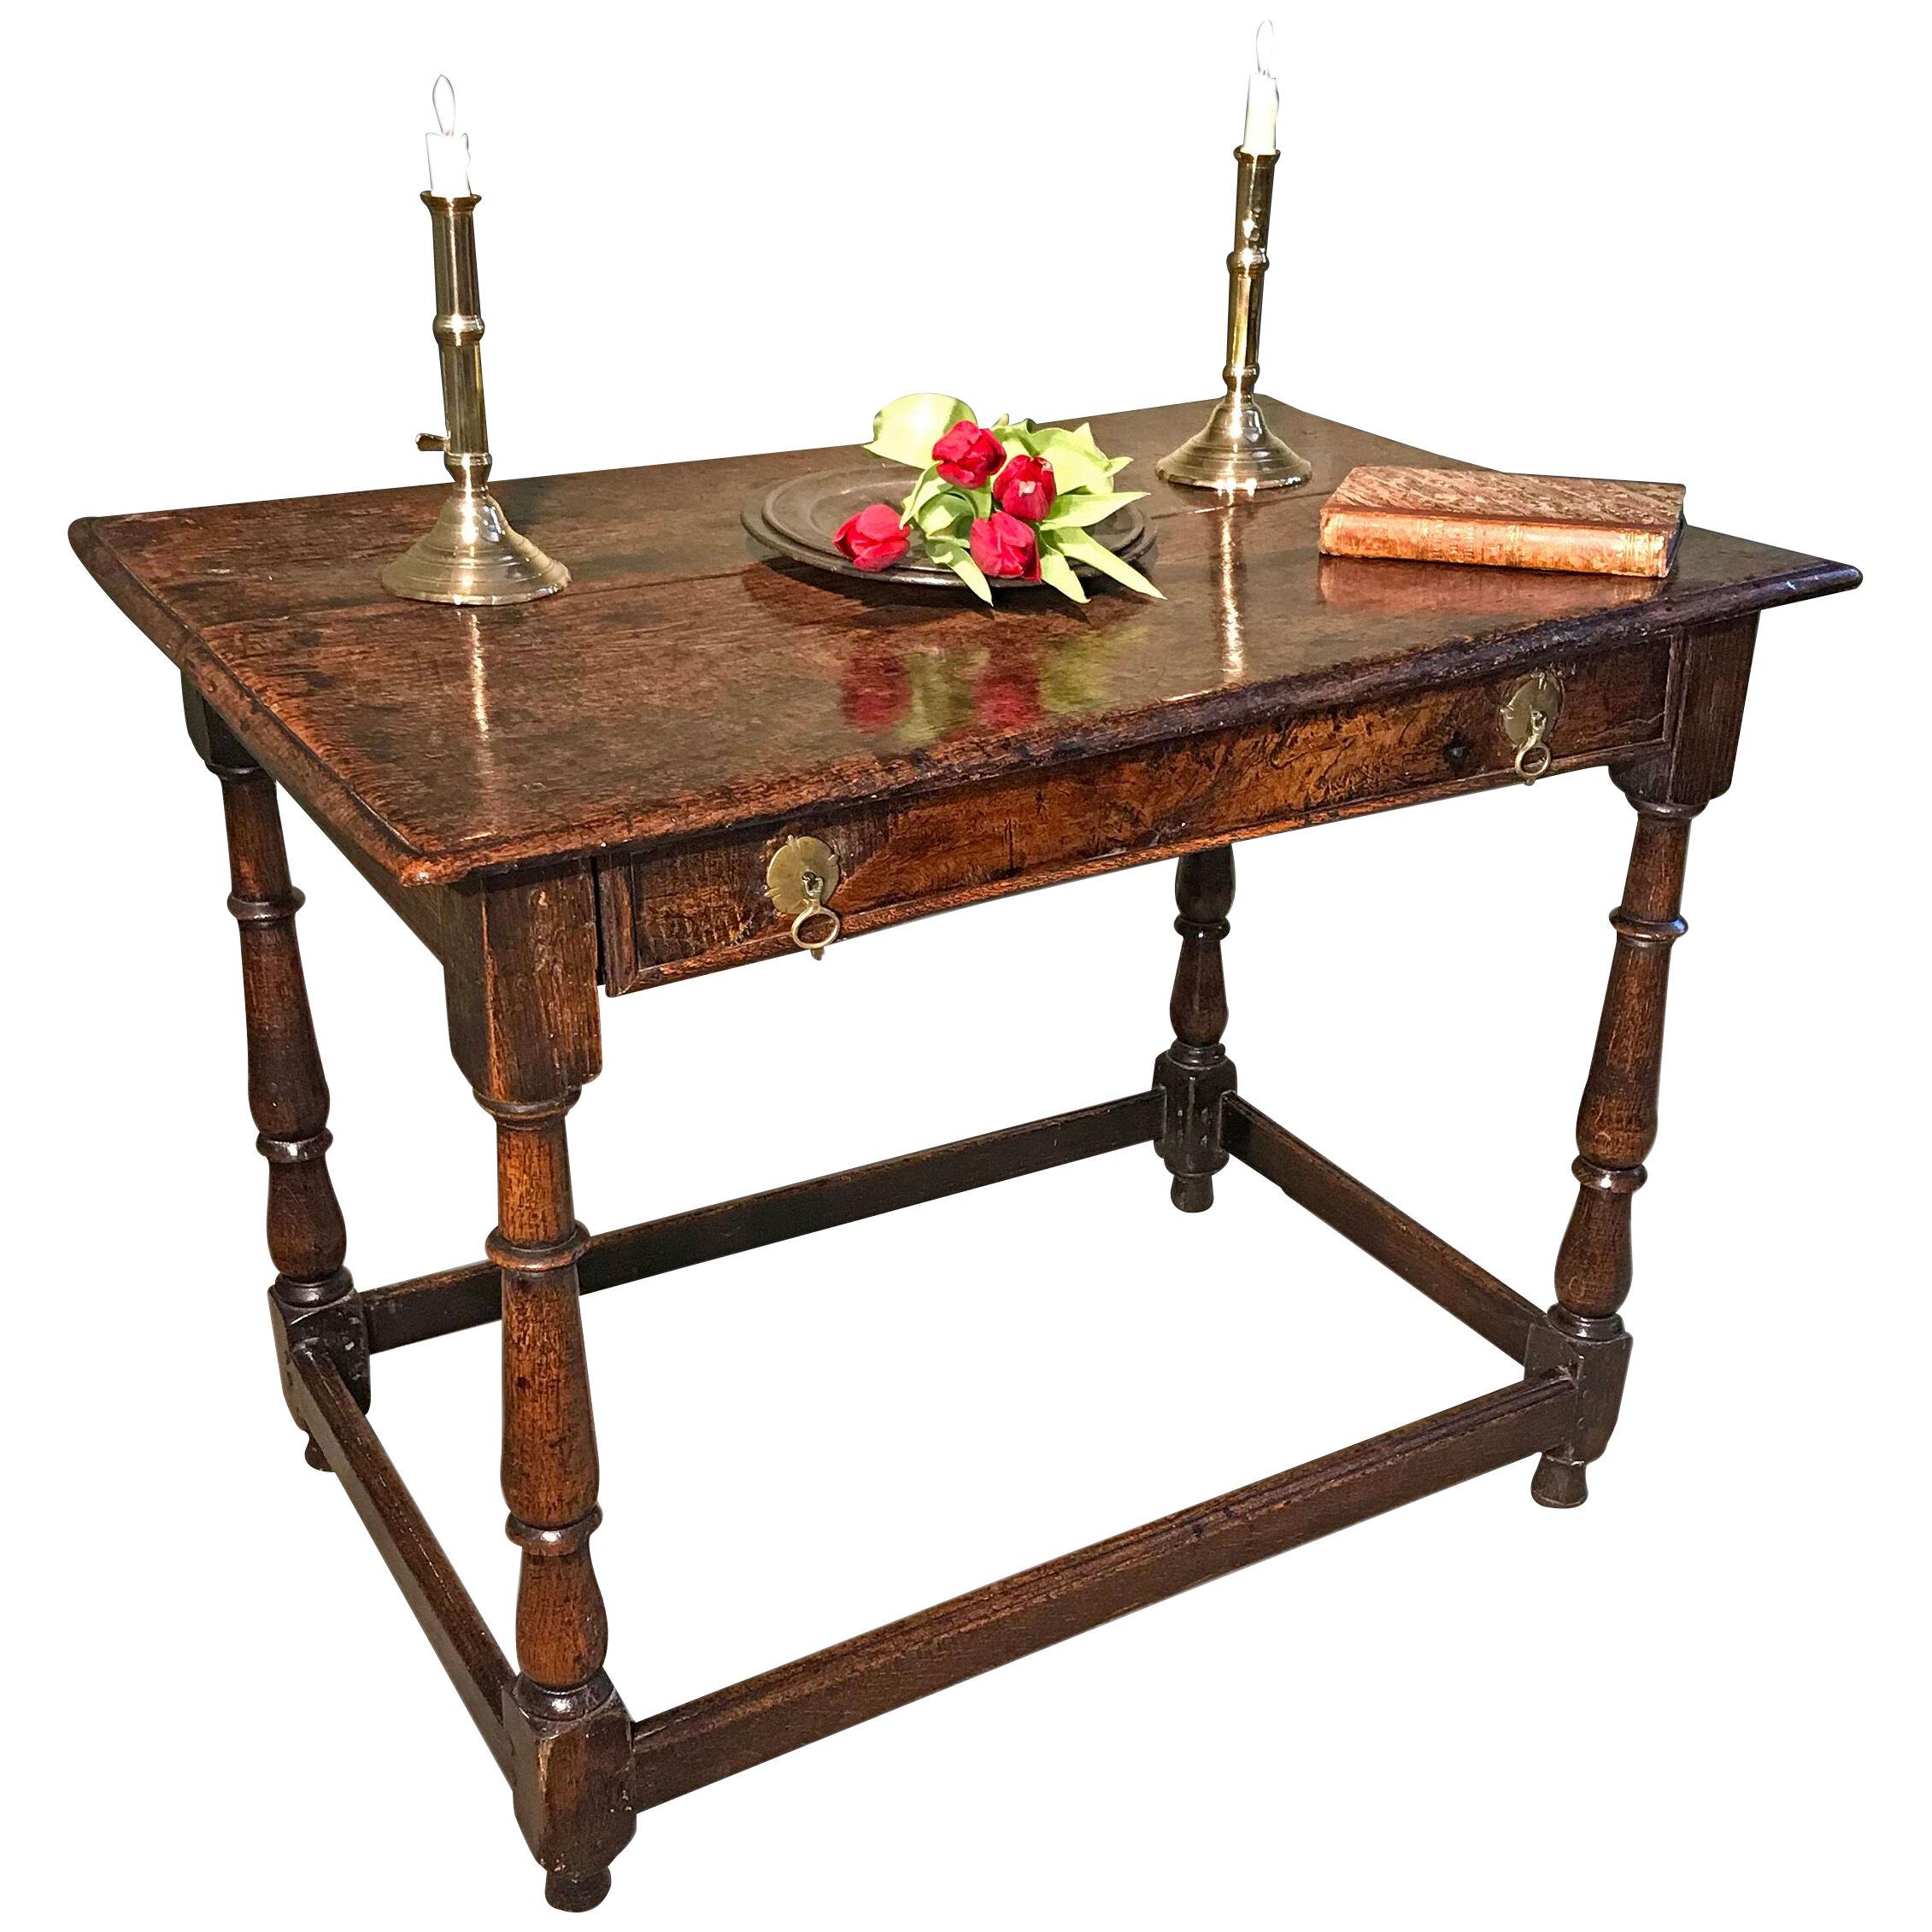 Late 17th century oak single drawer side table